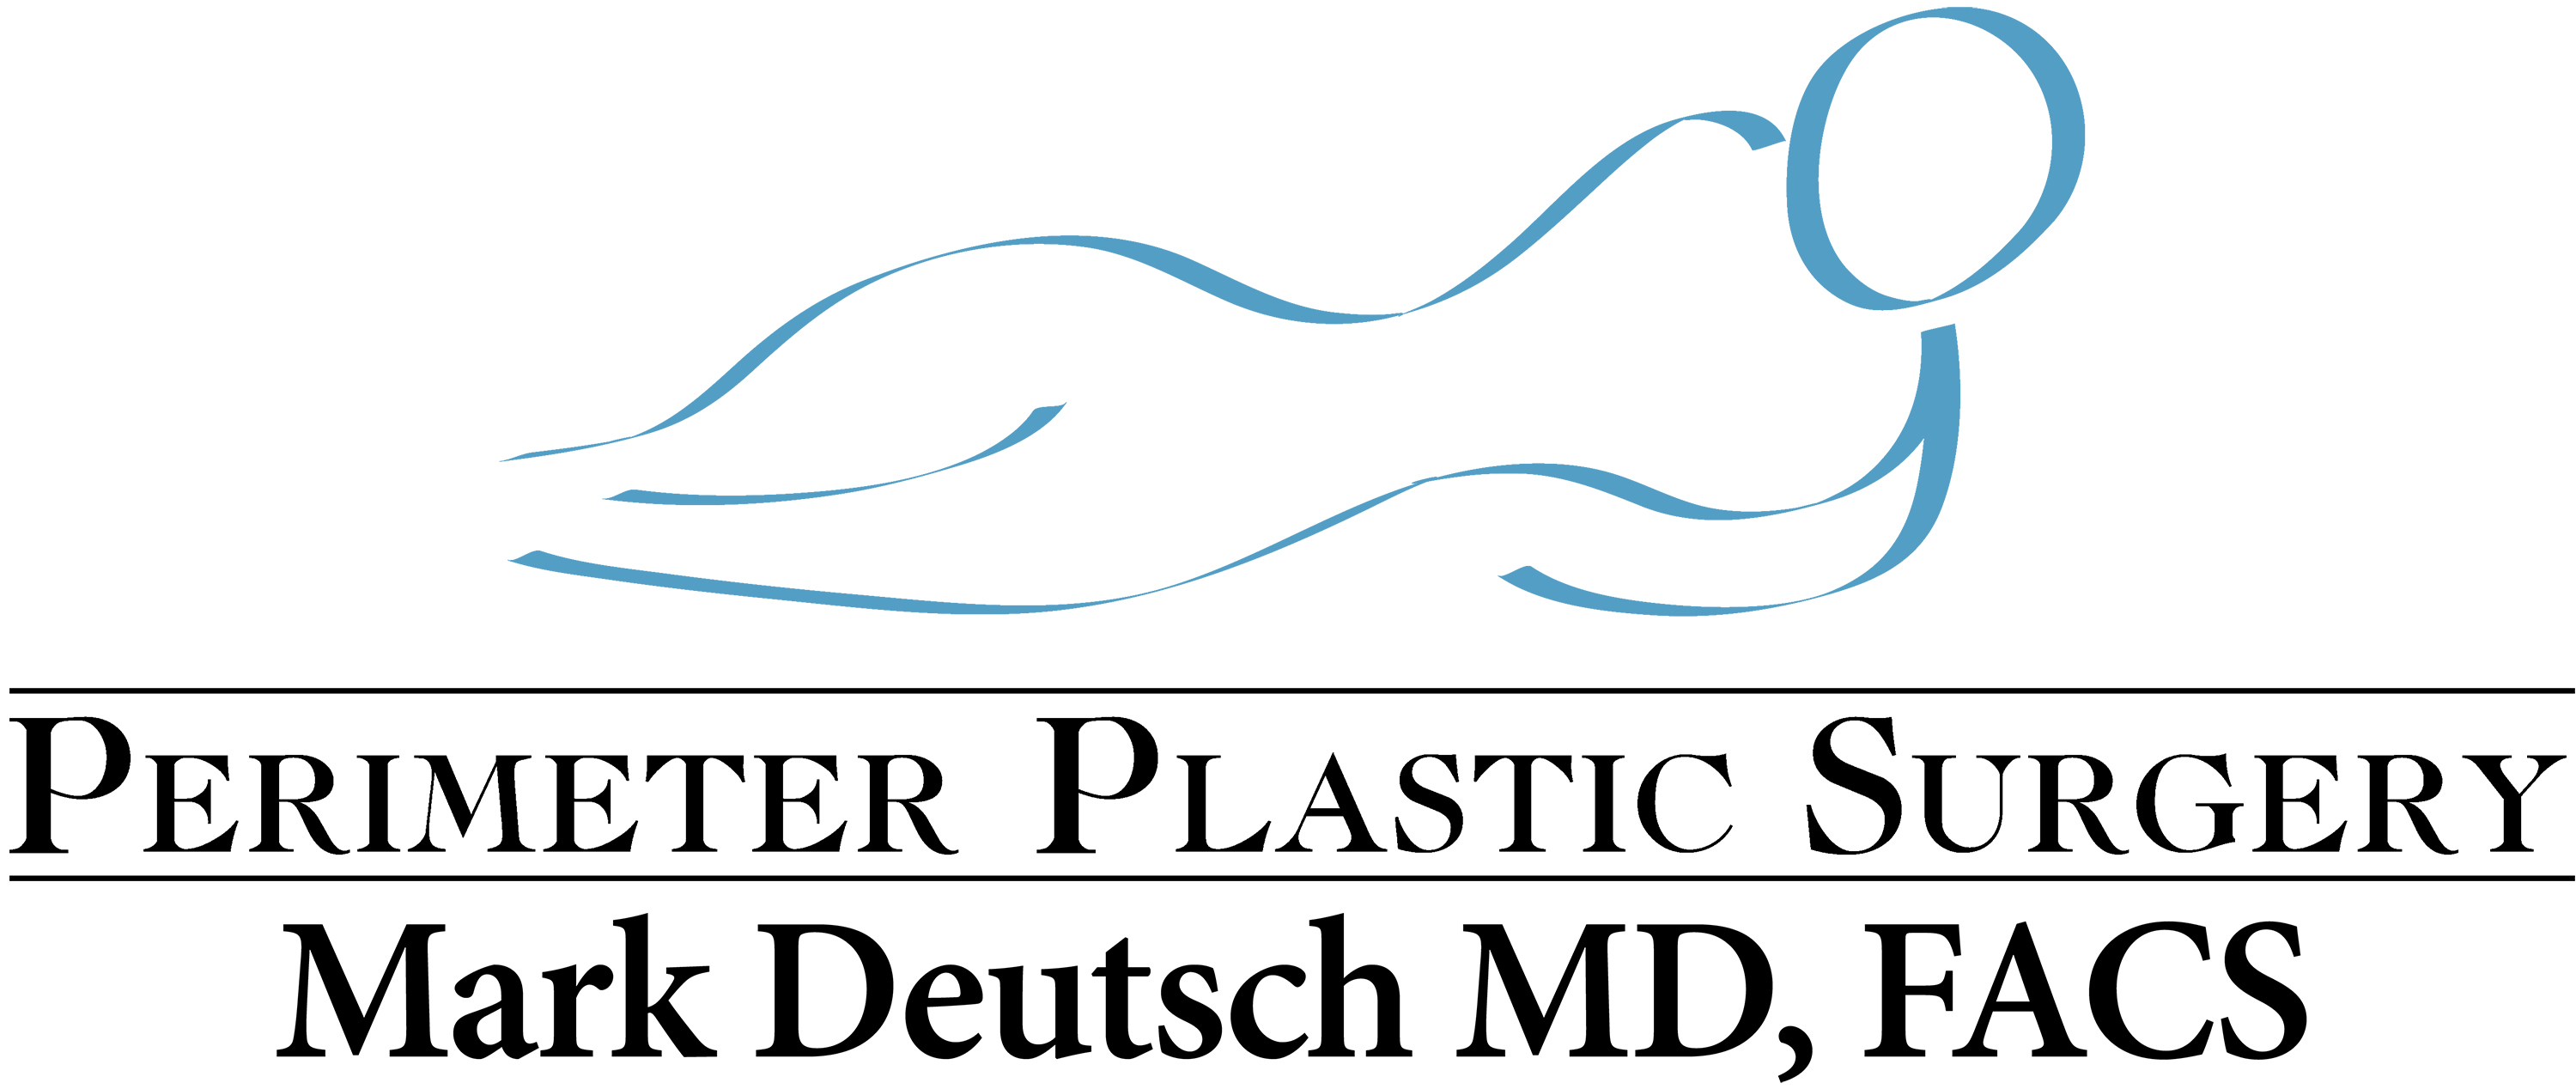 Perimeter Plastic Surgery Logo